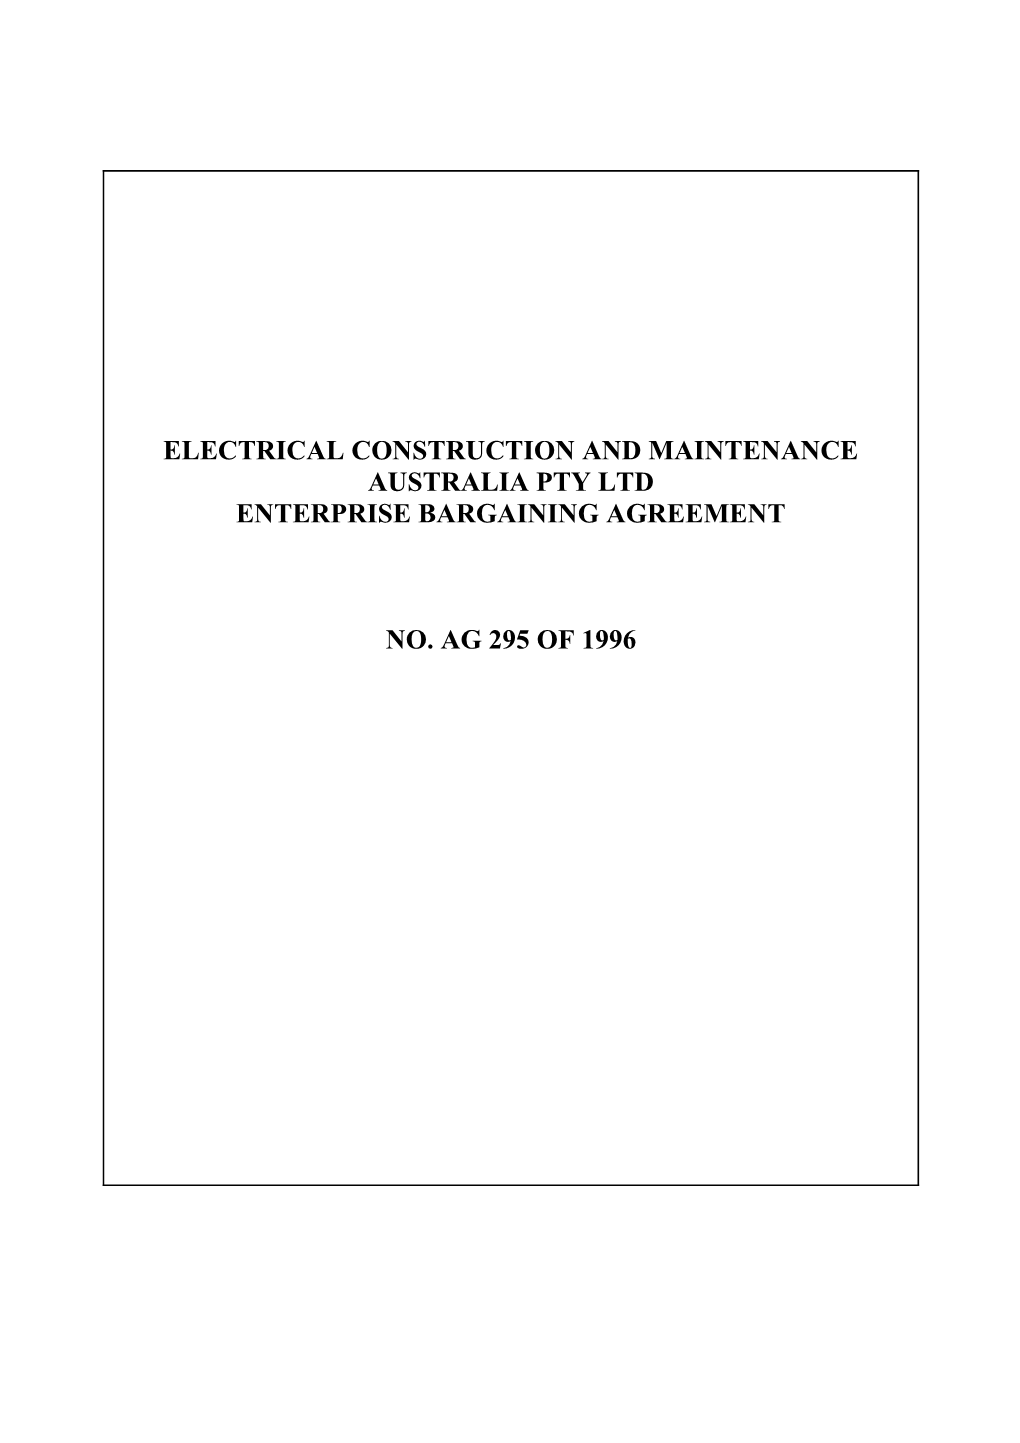 Electrical Construction and Maintenance Australia Pty Ltd Enterprise Bargaining Agreement